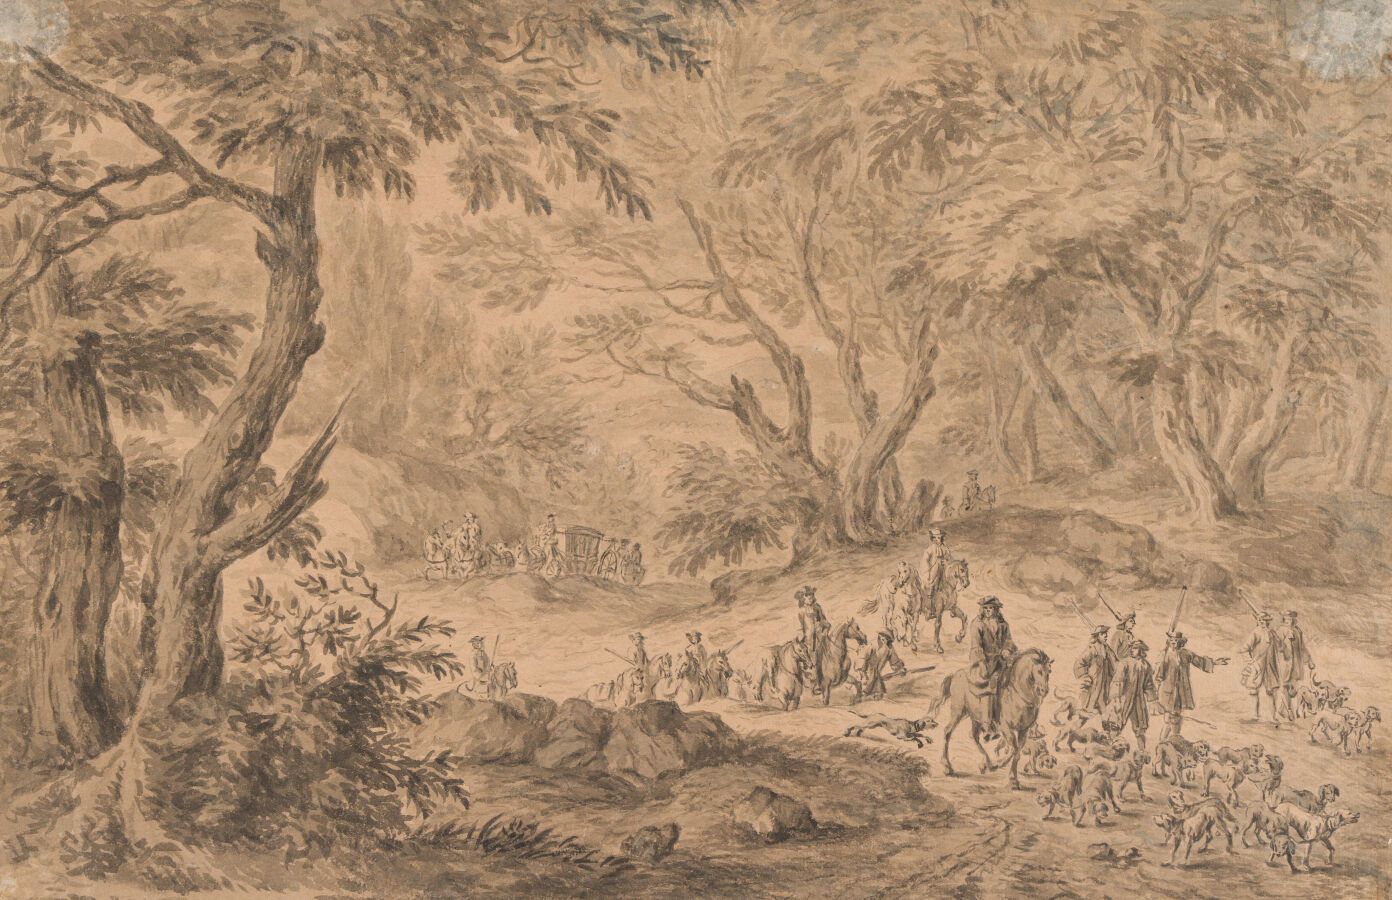 Null 10.亚当-弗兰斯-范德梅伦(1632 - 1690)

船员和他们的背包在灌木丛中

钢笔和灰色水洗

(修复)。

28,5 x 44 cm